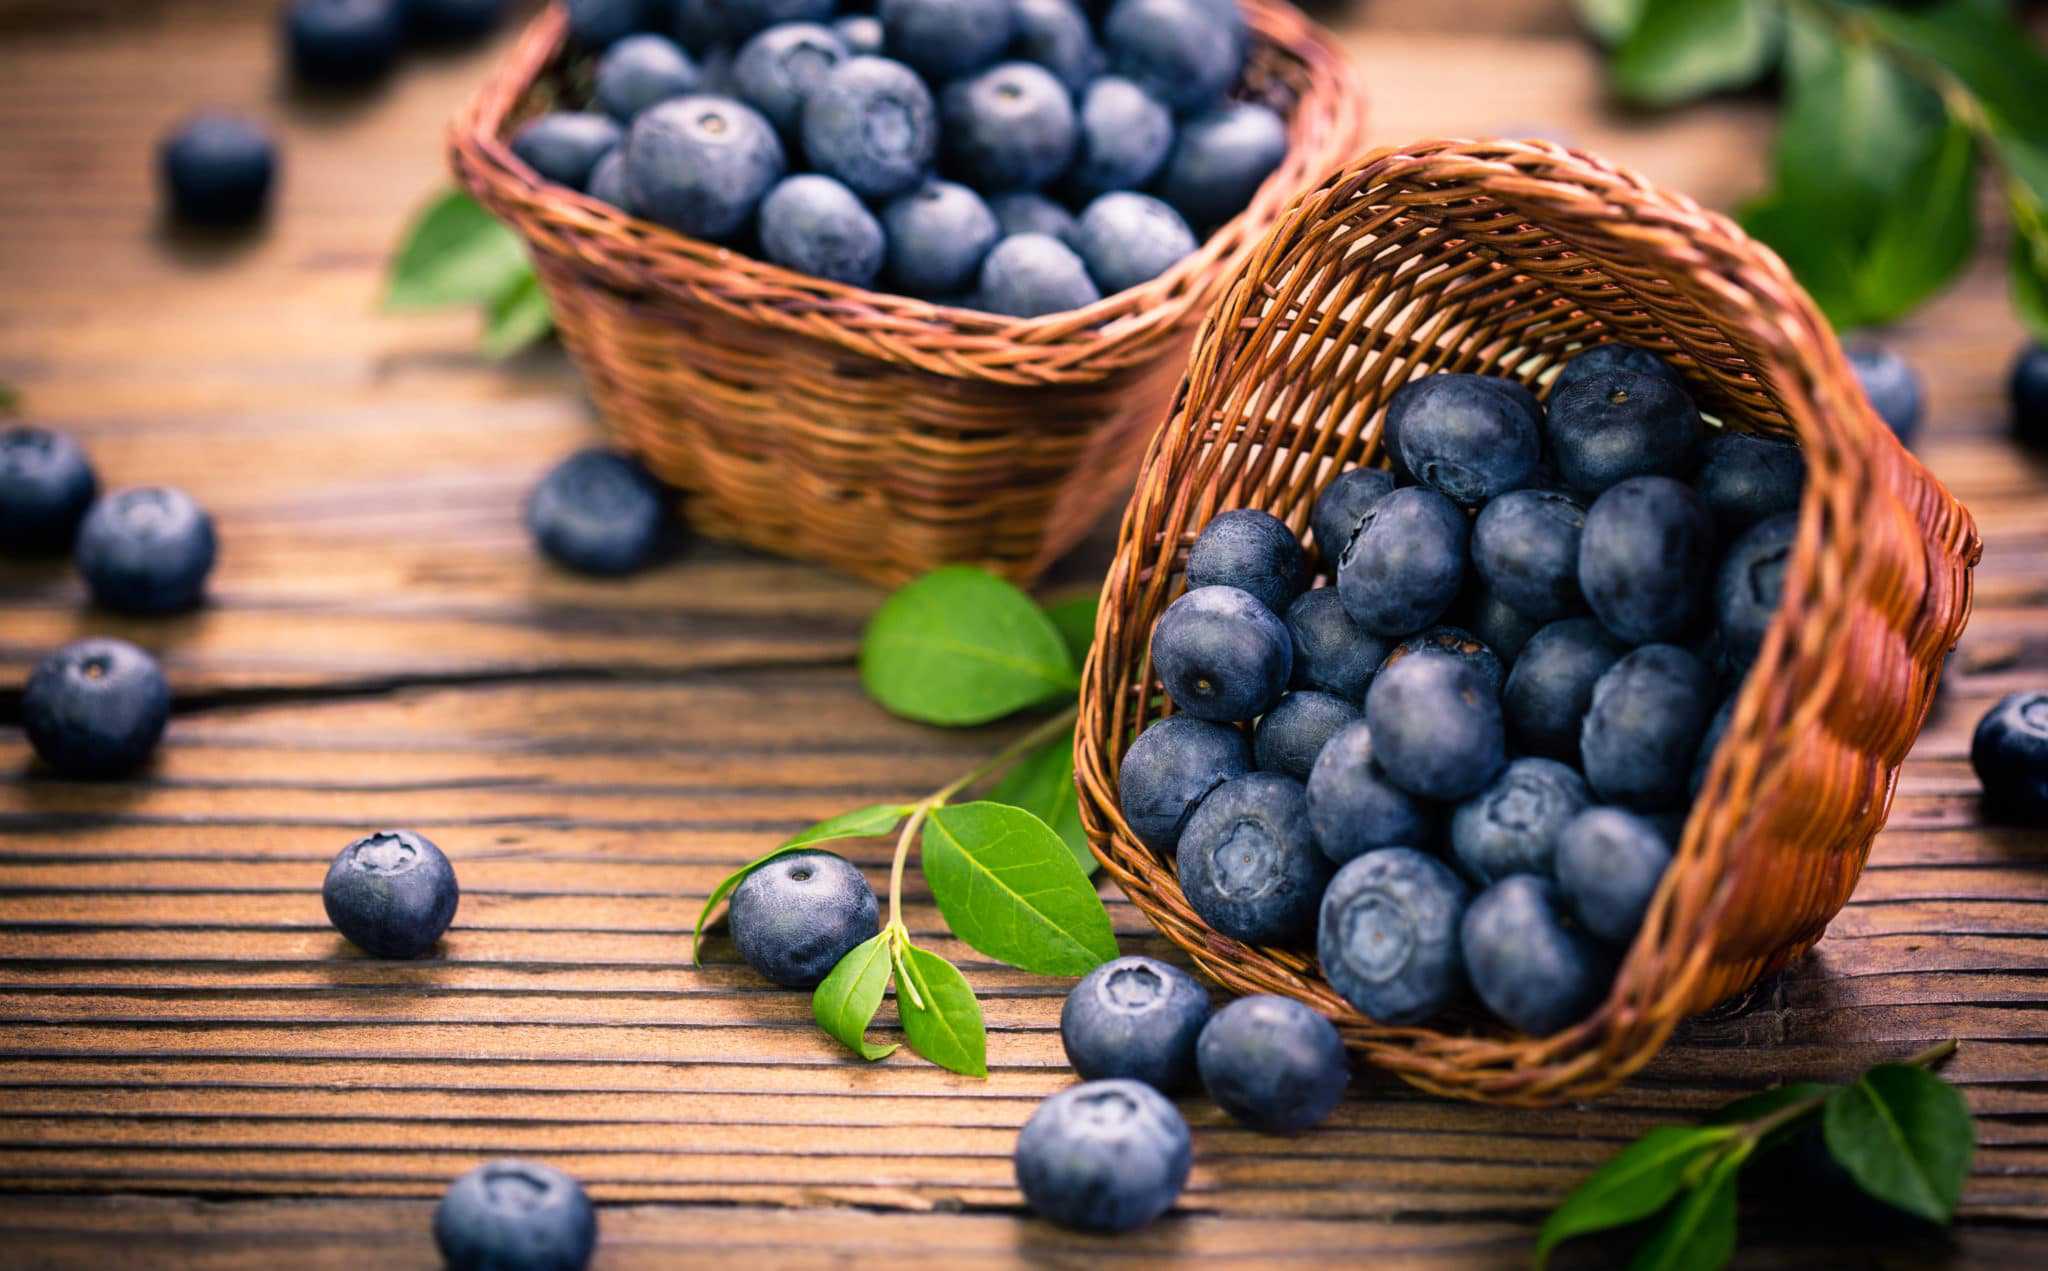 blueberries improves your eyesight